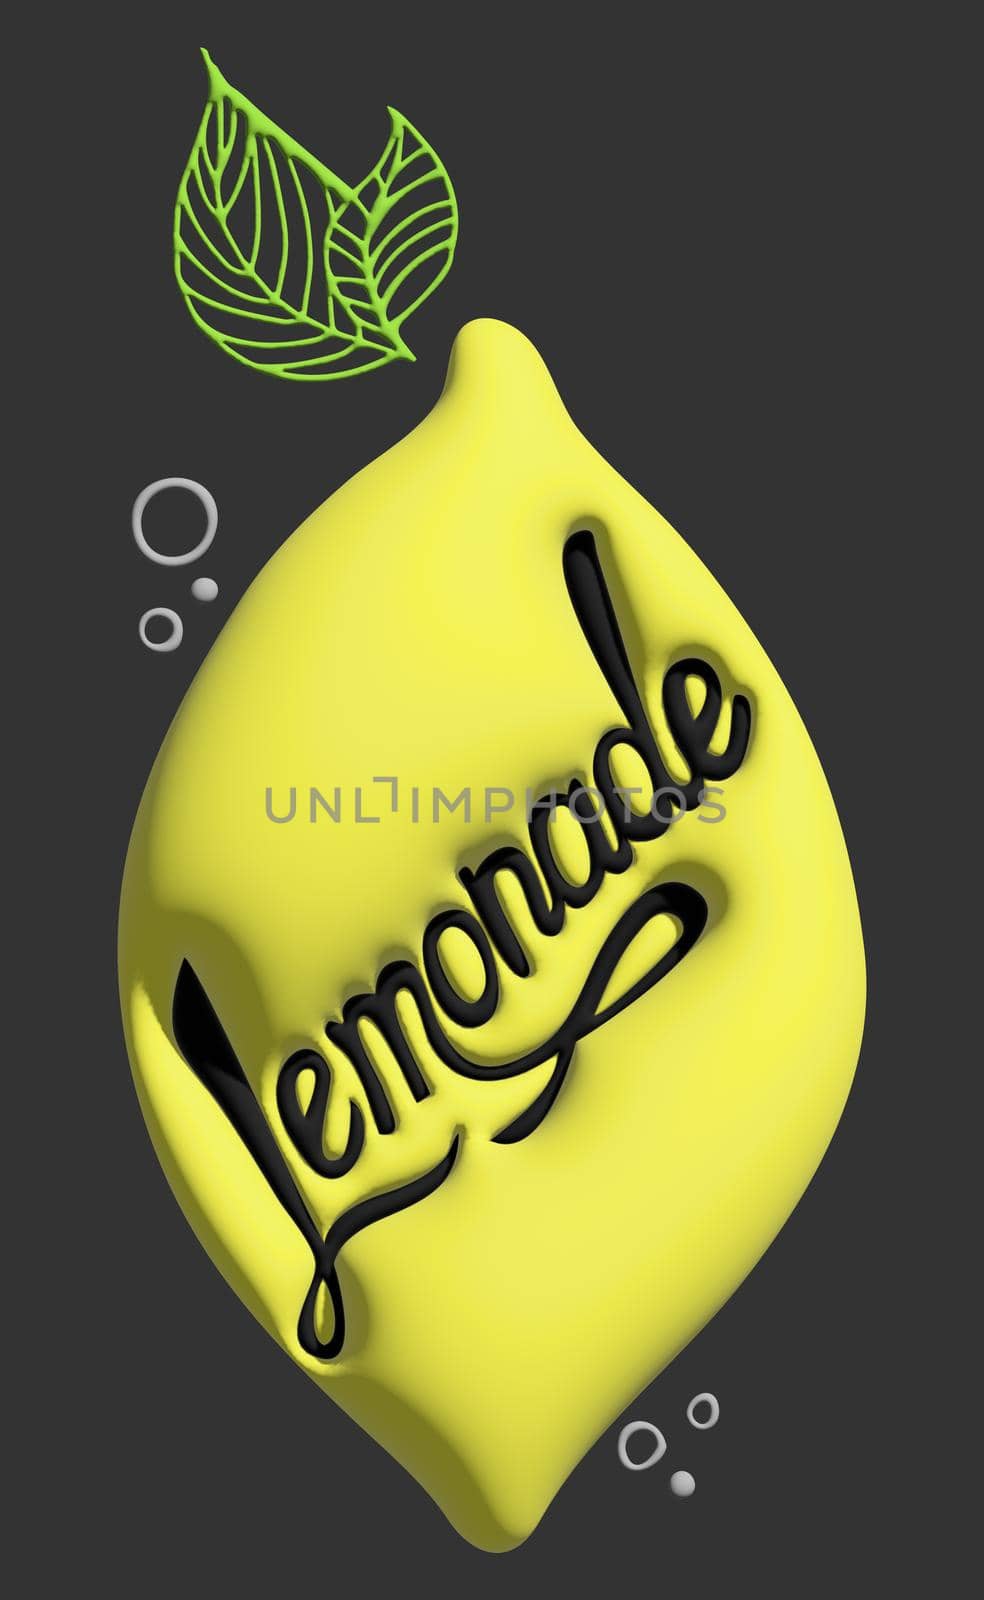 Text LEMONADE stylized as a ripe lemon. Stylish design for a brand, label or advertisement - 3D image